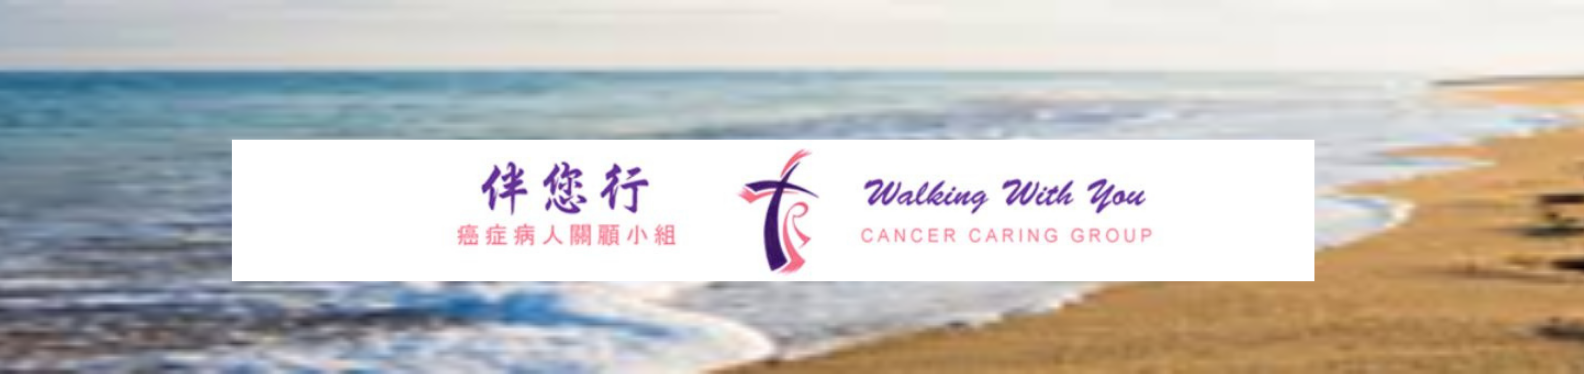 Cancer Support-banner